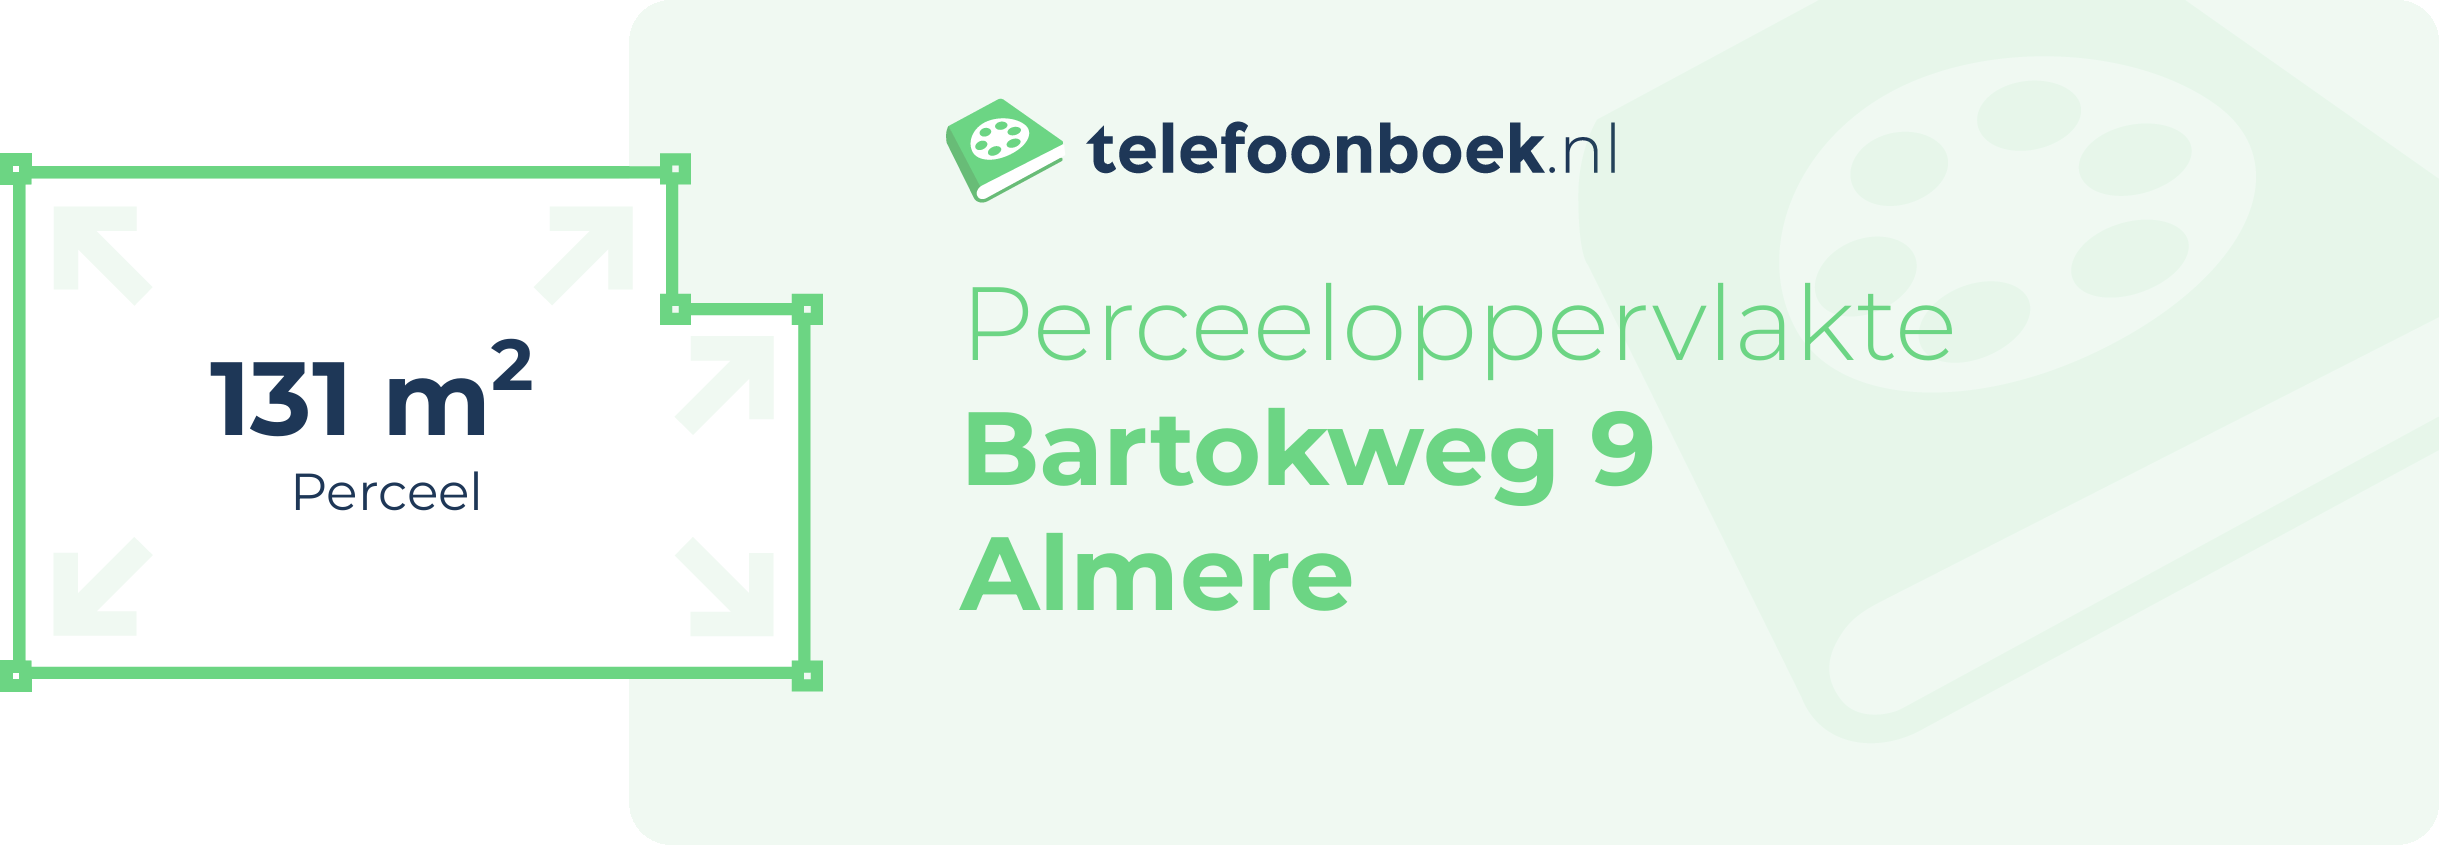 Perceeloppervlakte Bartokweg 9 Almere